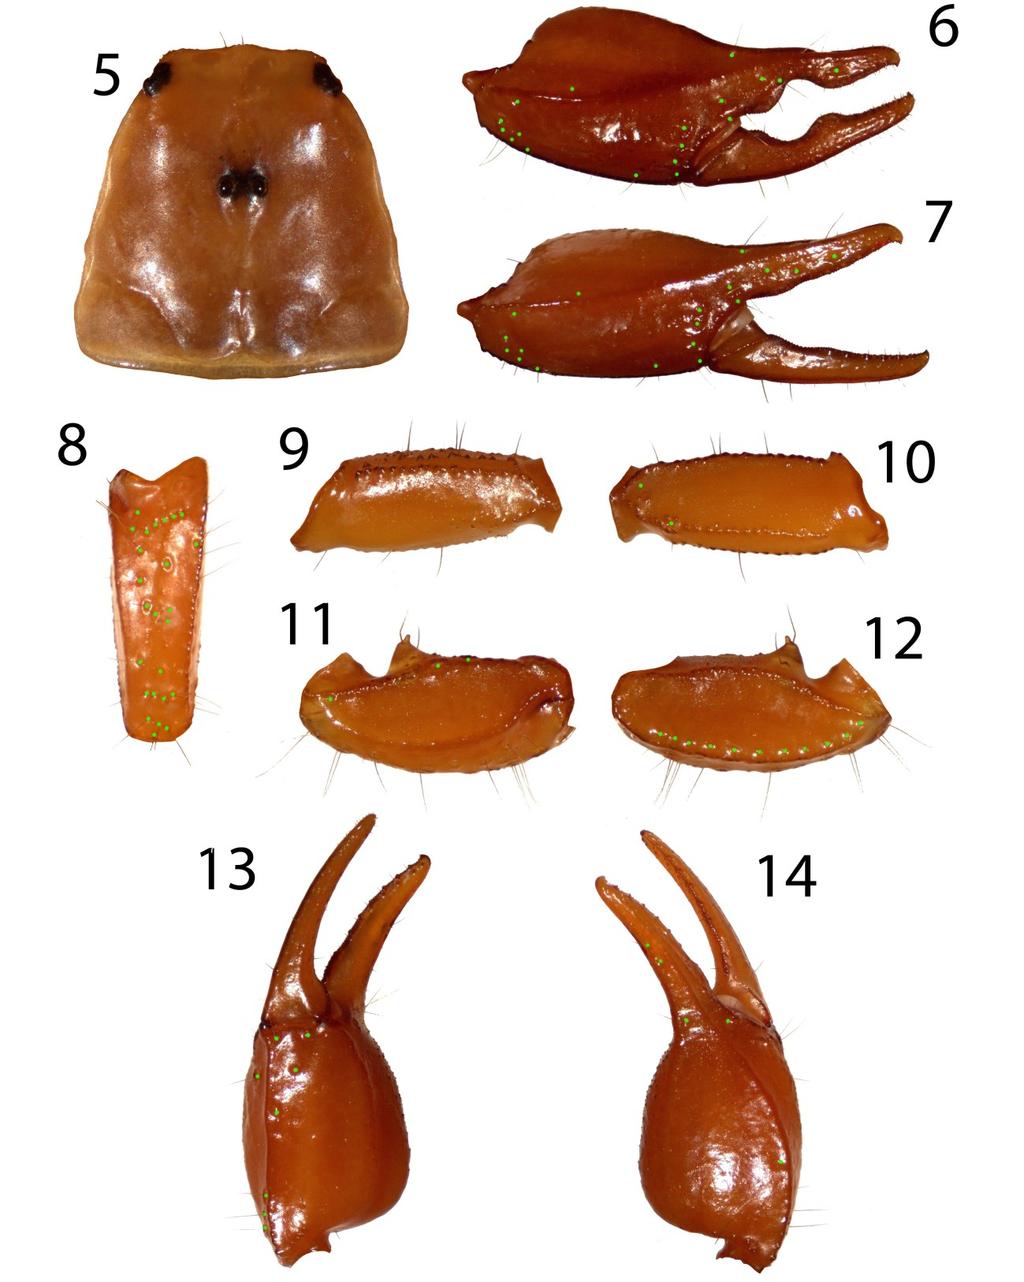 4 Euscorpius 2014, No. 184 Figures 5-14: Euscorpius gocmeni sp. n. 5. Carapace. 6. External view of chela of the adult male. 7. External view of chela of the adult female. 8.